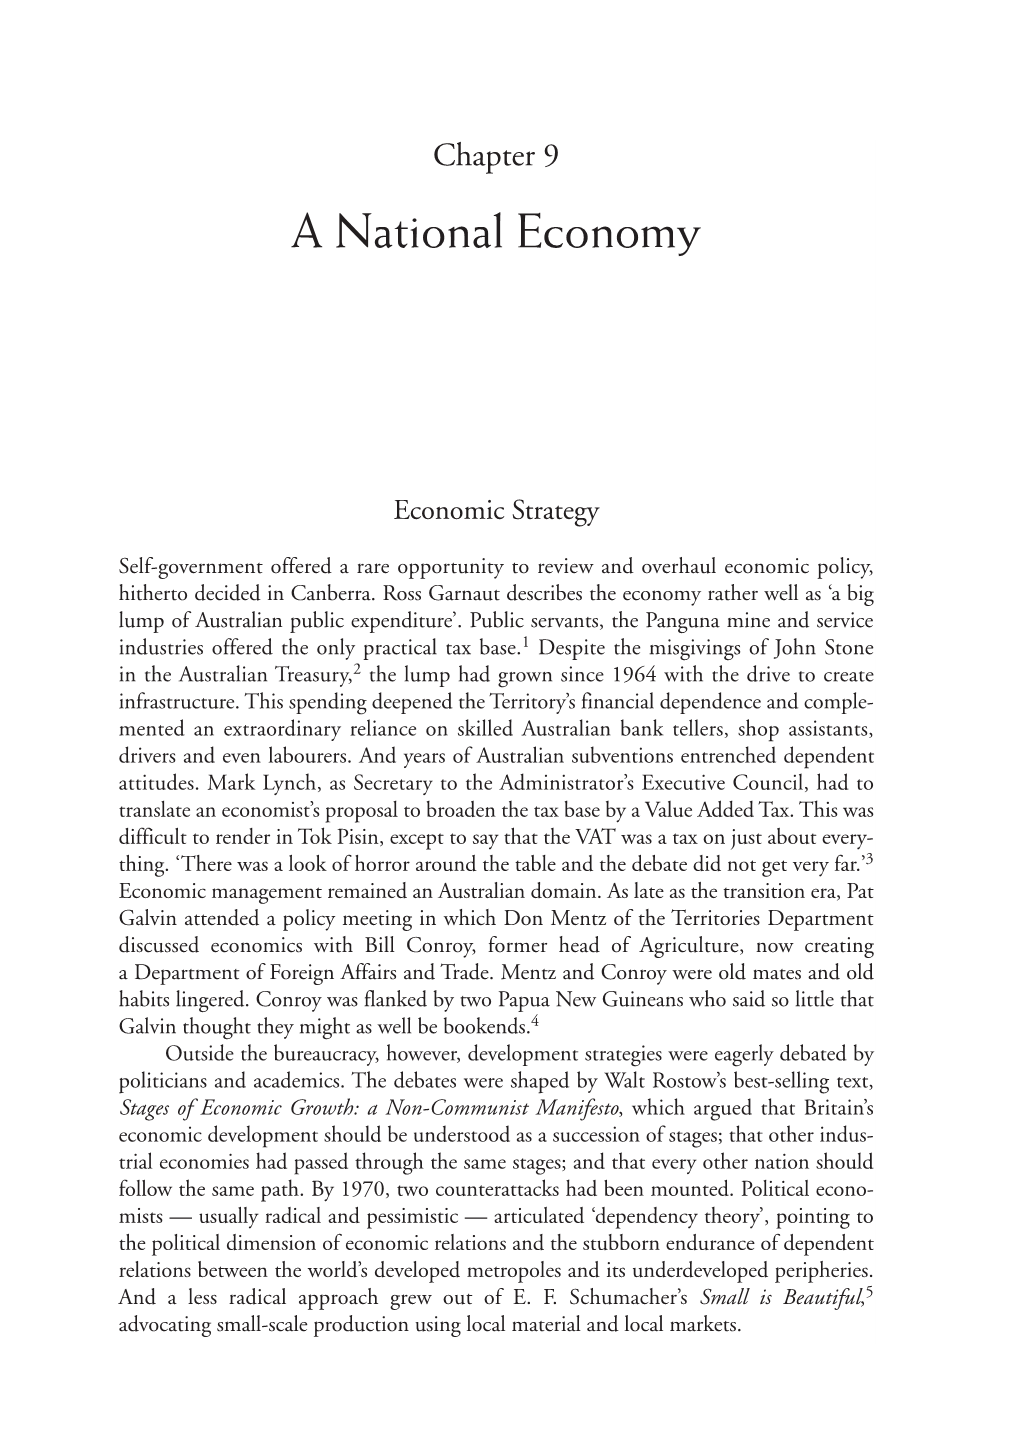 A National Economy